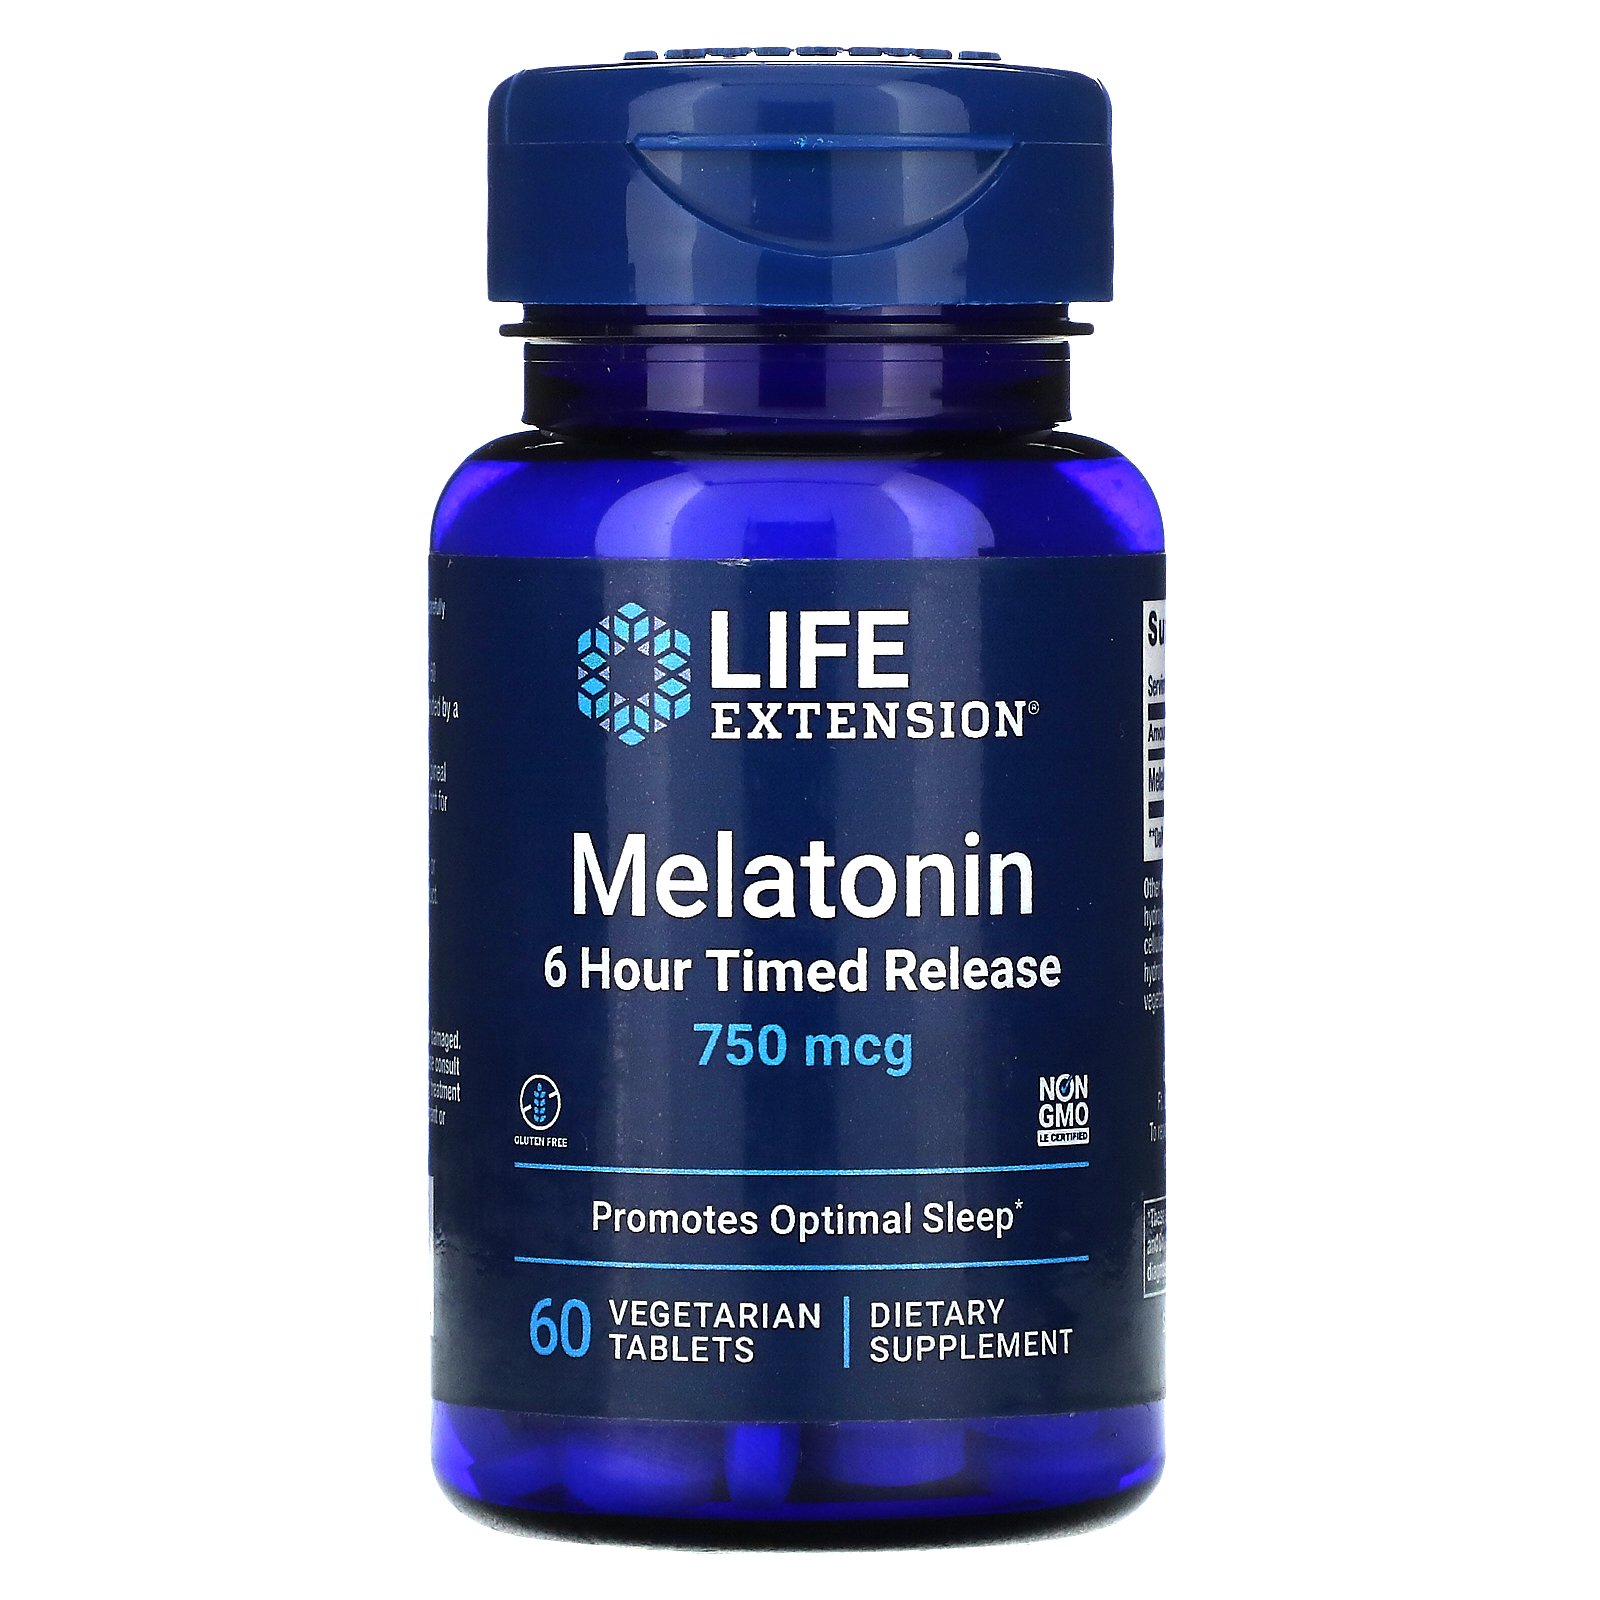 Life Extension Melatonin, 6 Hour Timed Release, 750 mcg, 60 Vegetarian Tablets - image 1 of 2